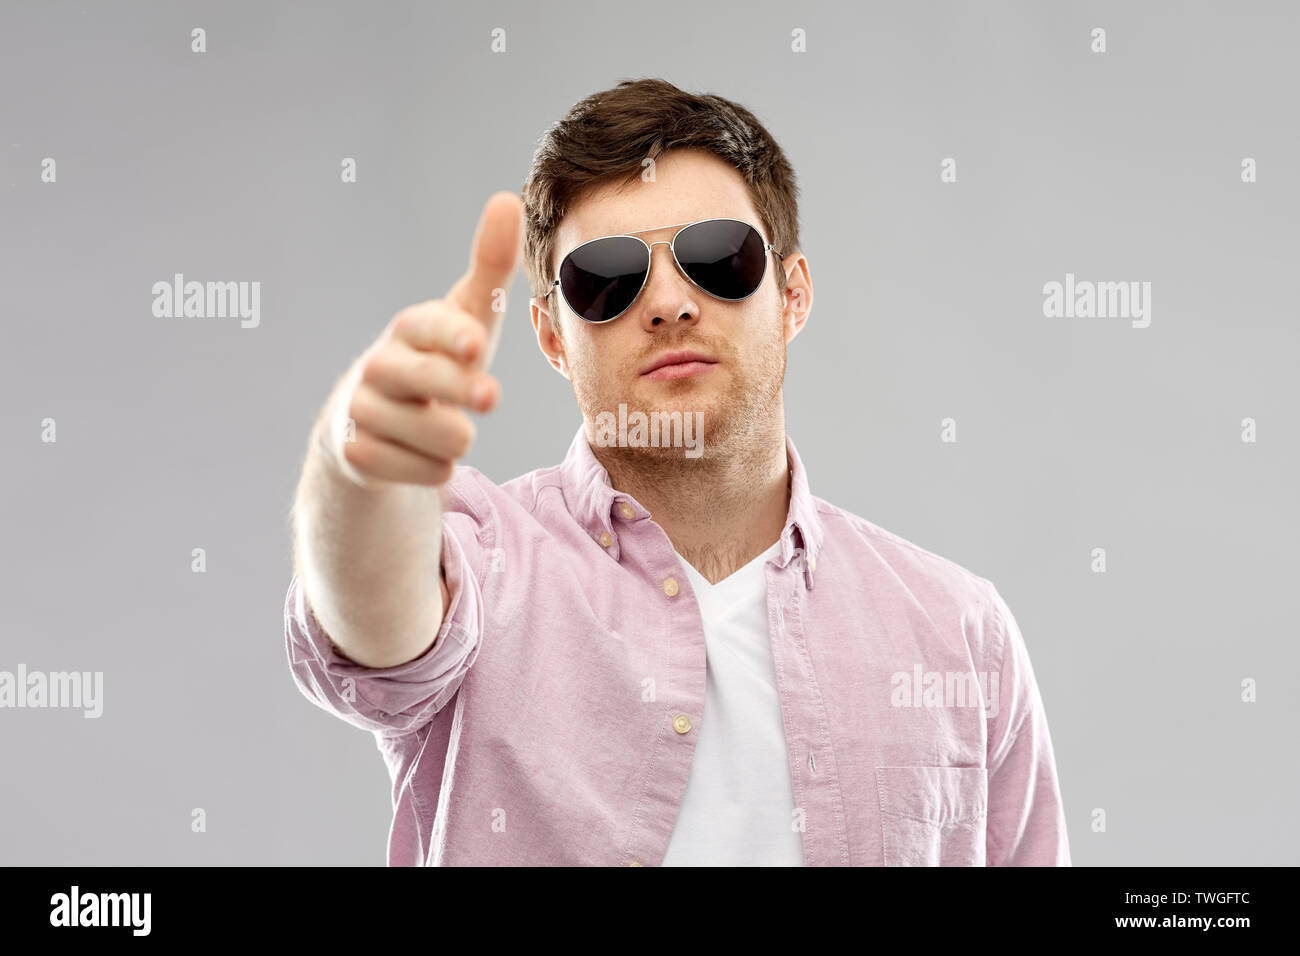 young man in sunglasses making hand gun gesture Stock Photo